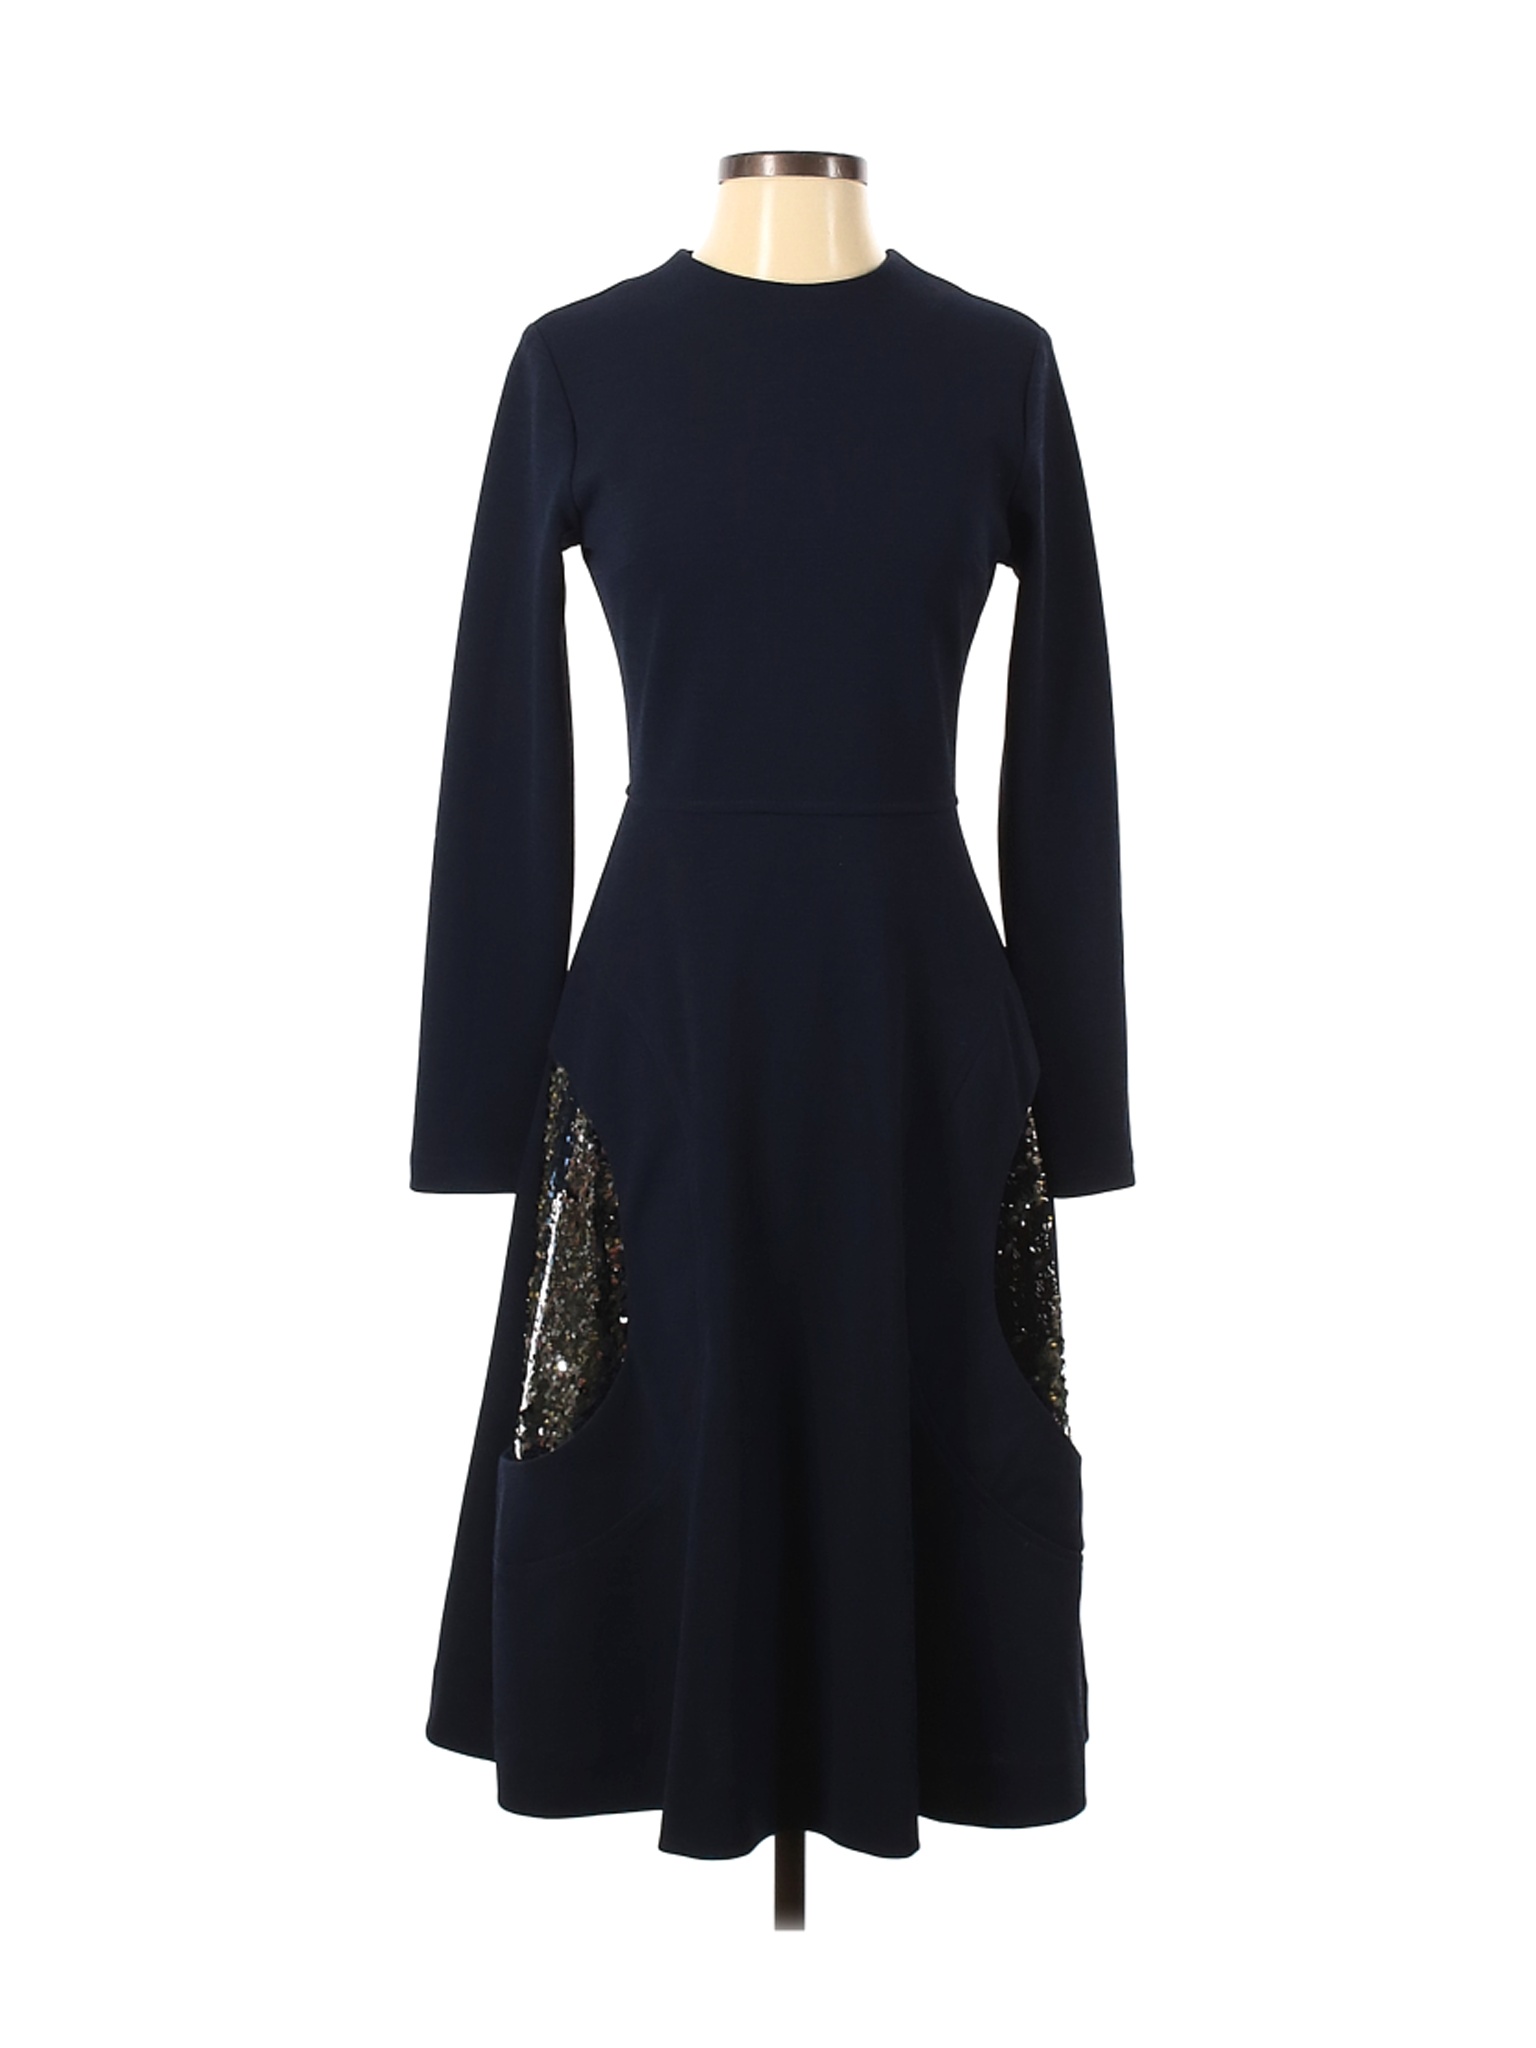 Assorted Brands Women Black Cocktail Dress XS | eBay